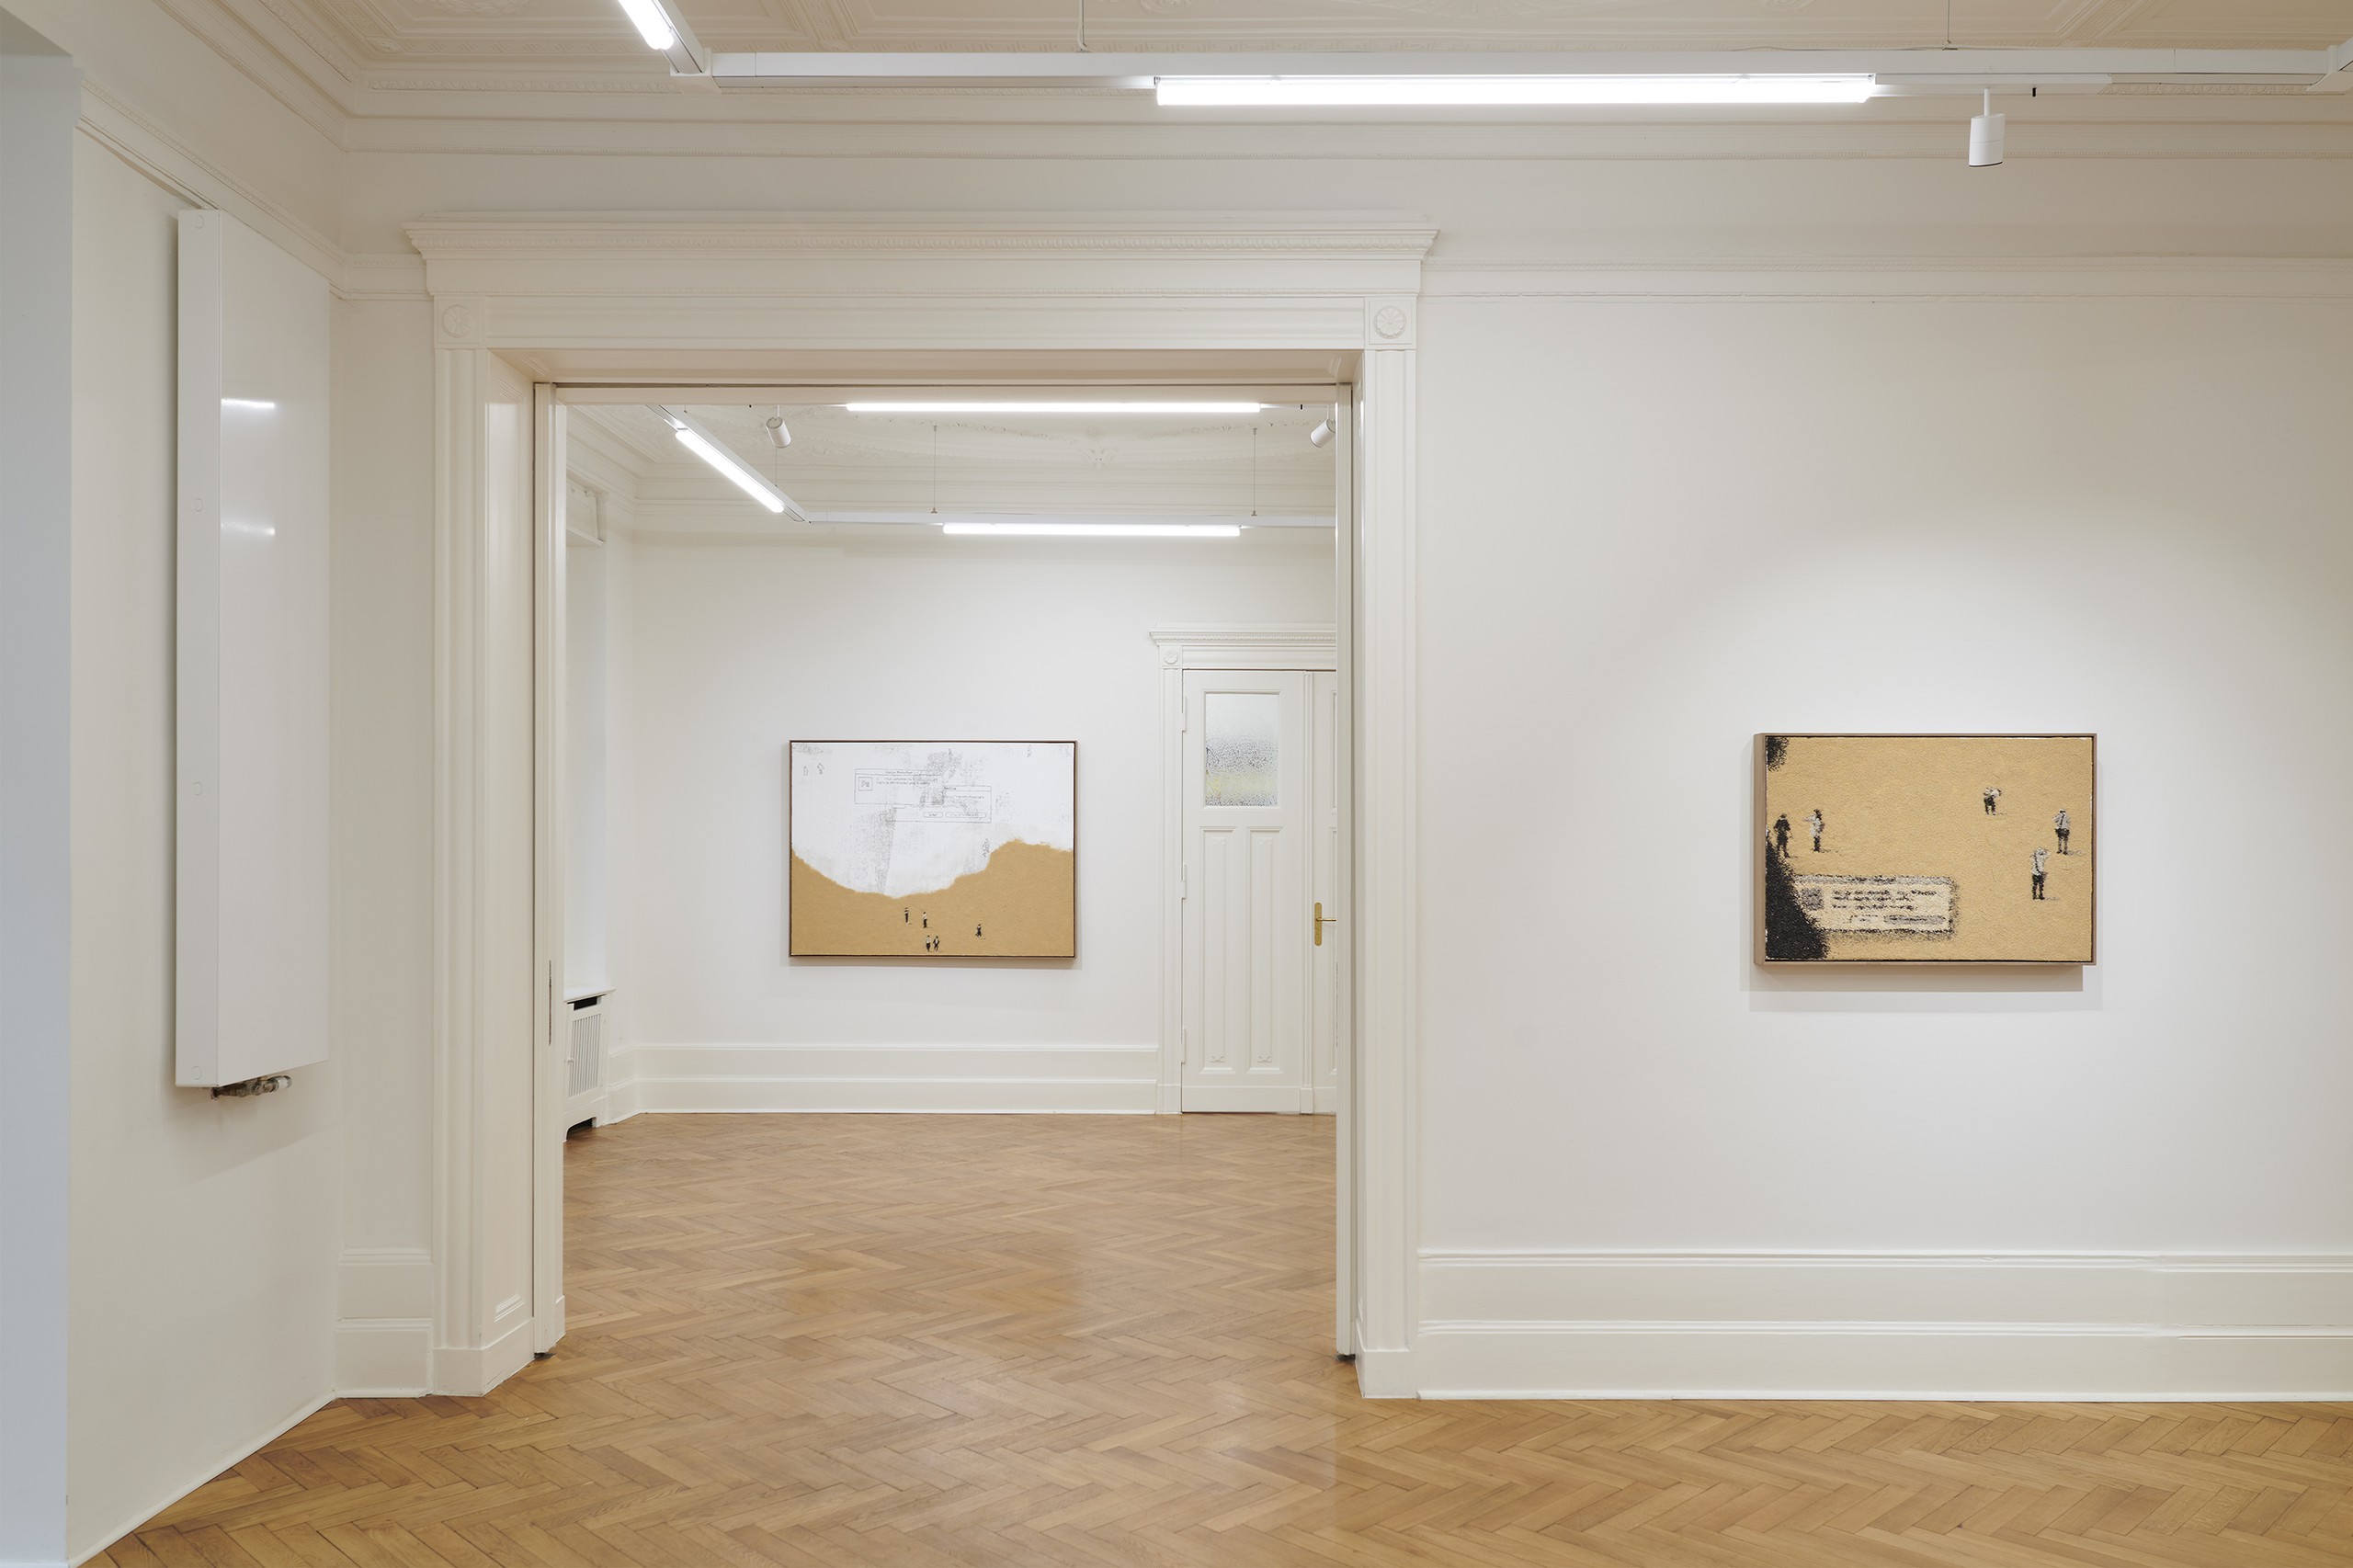 Installation view, Grainy Pixels, Société, Berlin, 2022